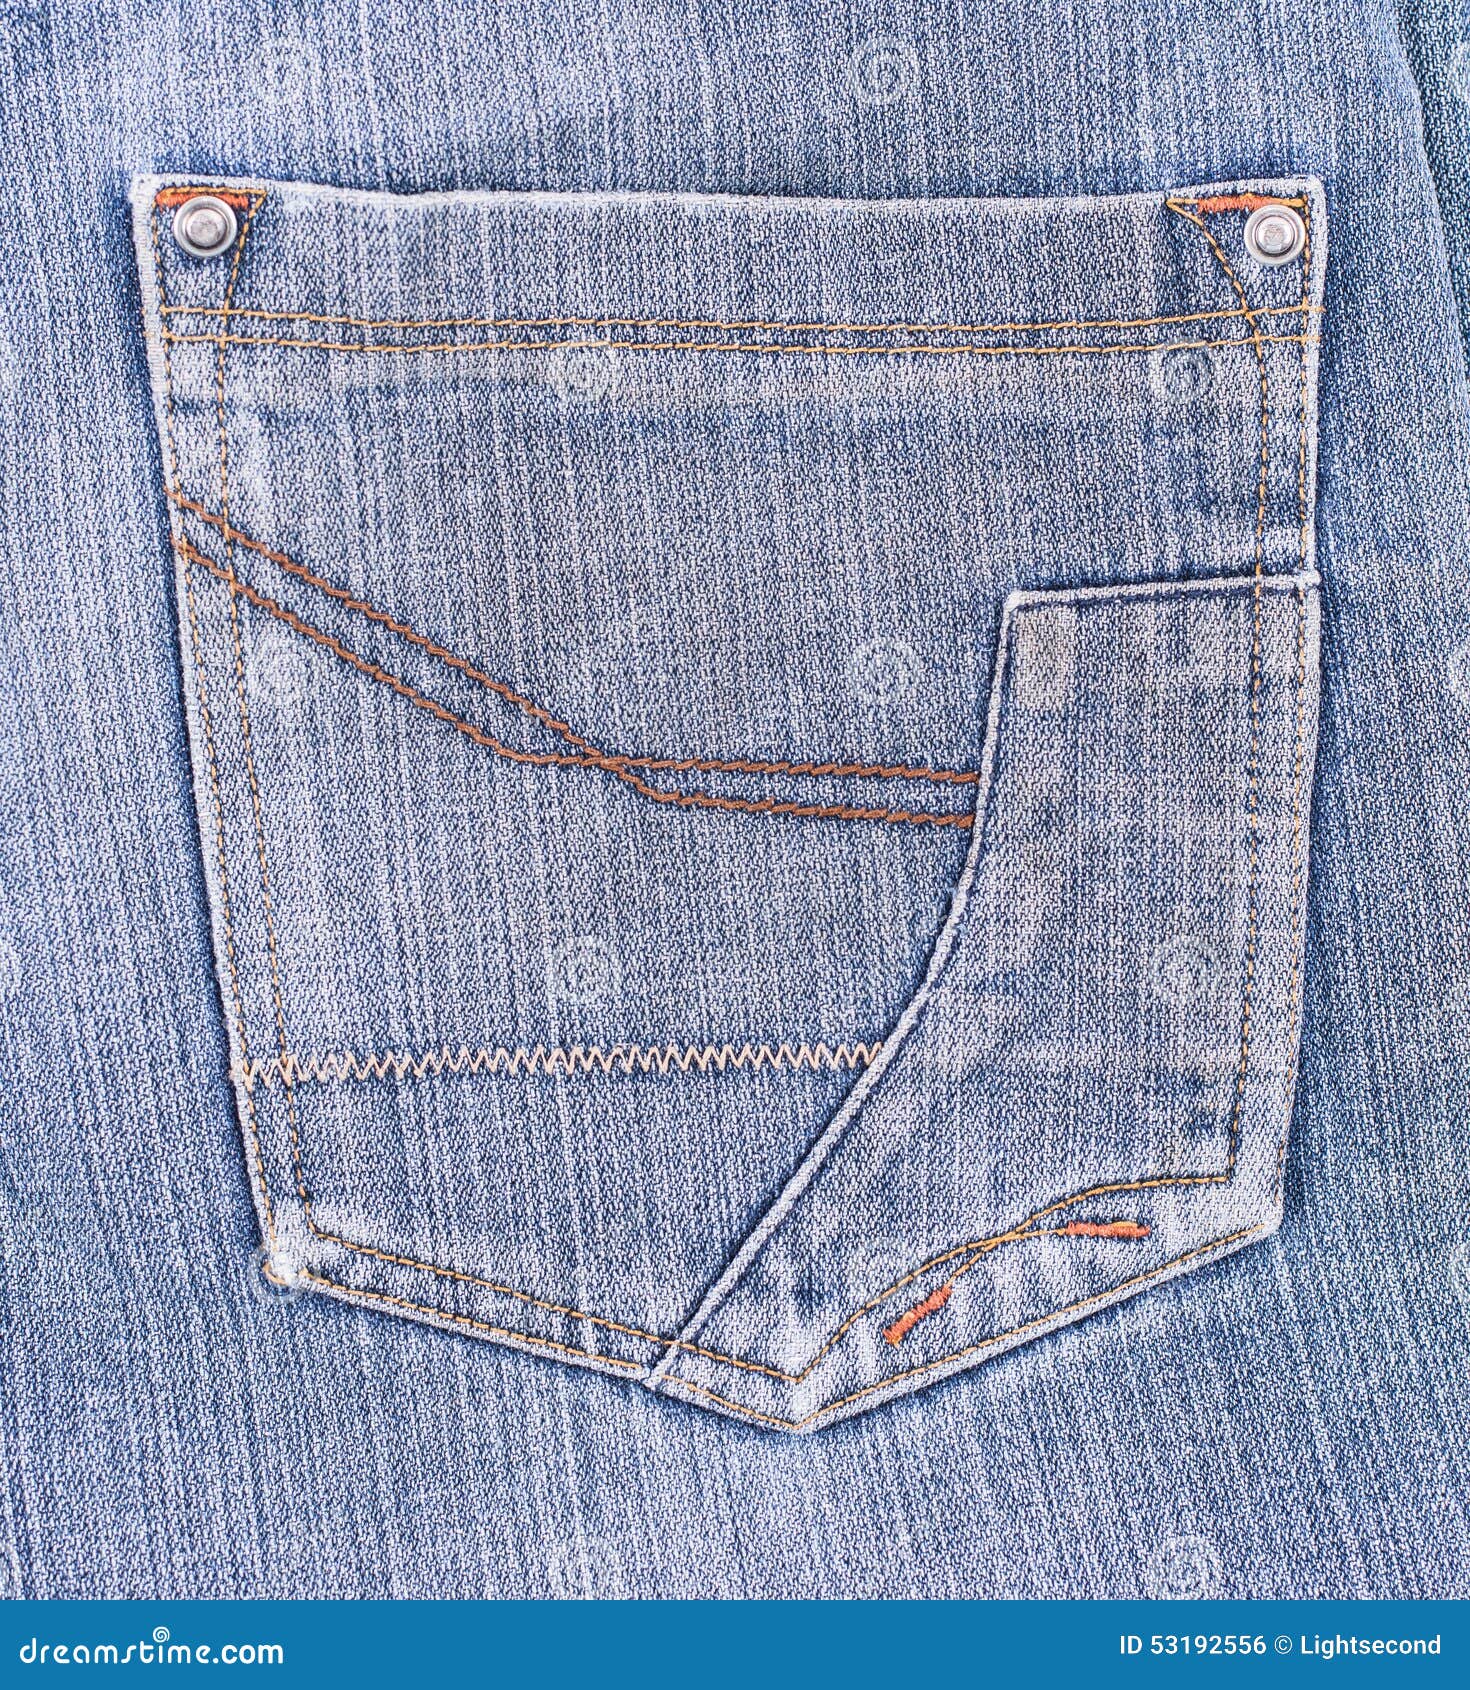 Buy Okeya Men's Slim Fit Jeans Pant Neavy Blue at Amazon.in